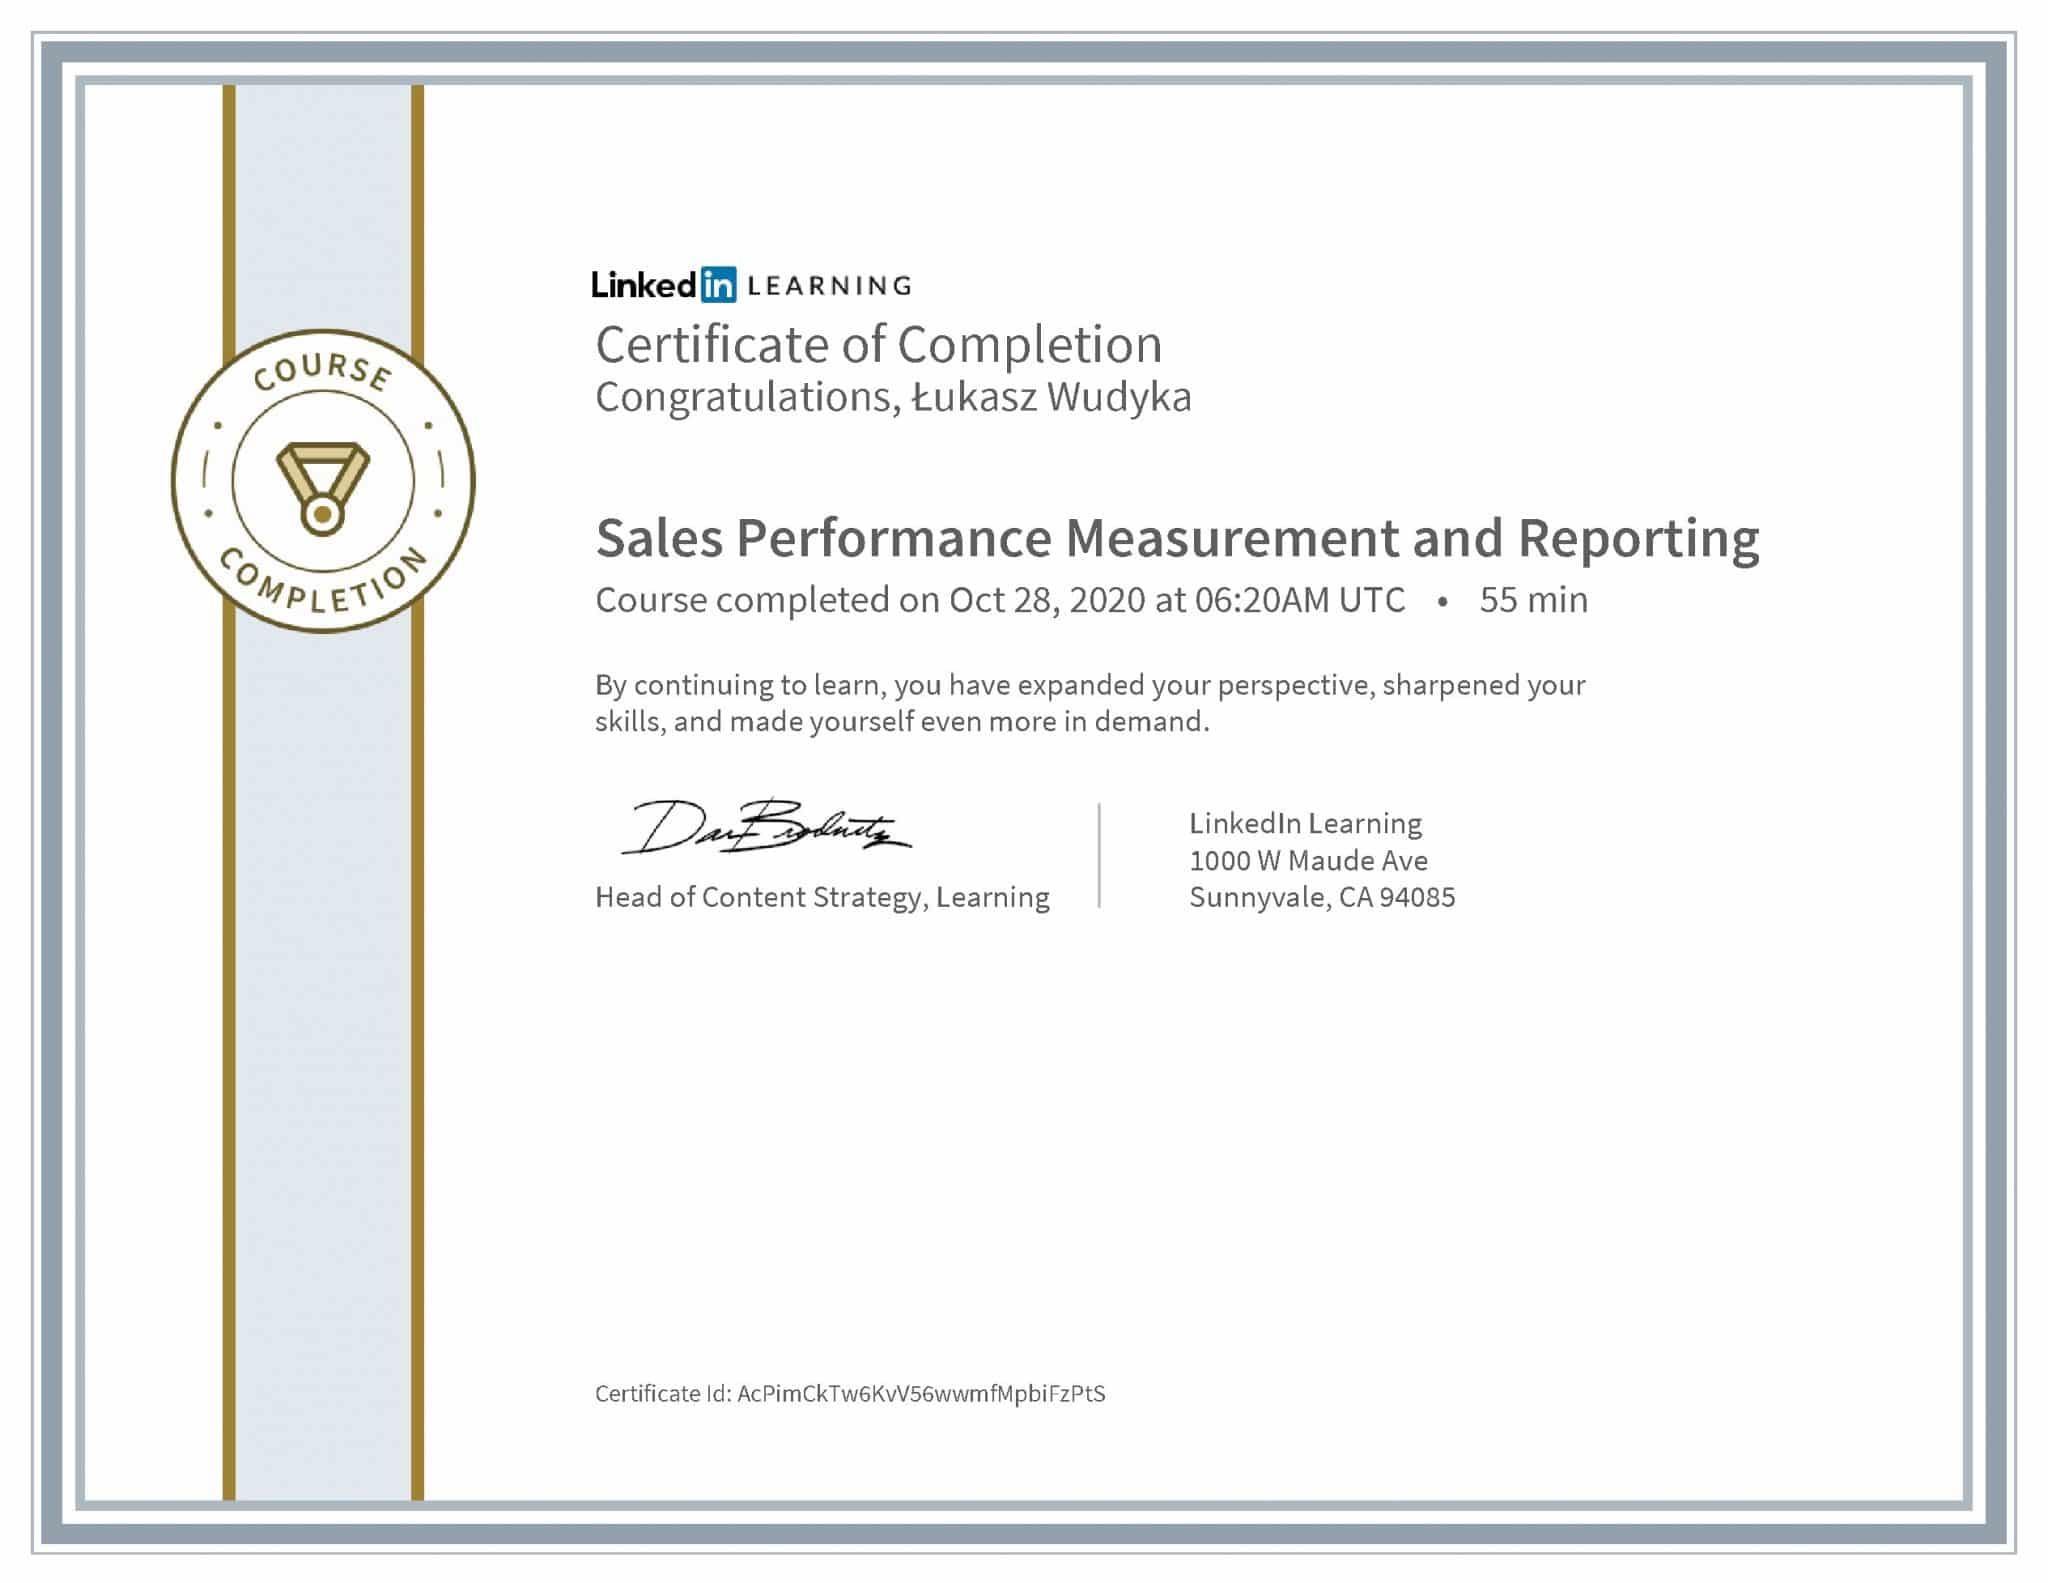 Łukasz Wudyka certyfikat LinkedIn Sales Performance Measurement and Reporting